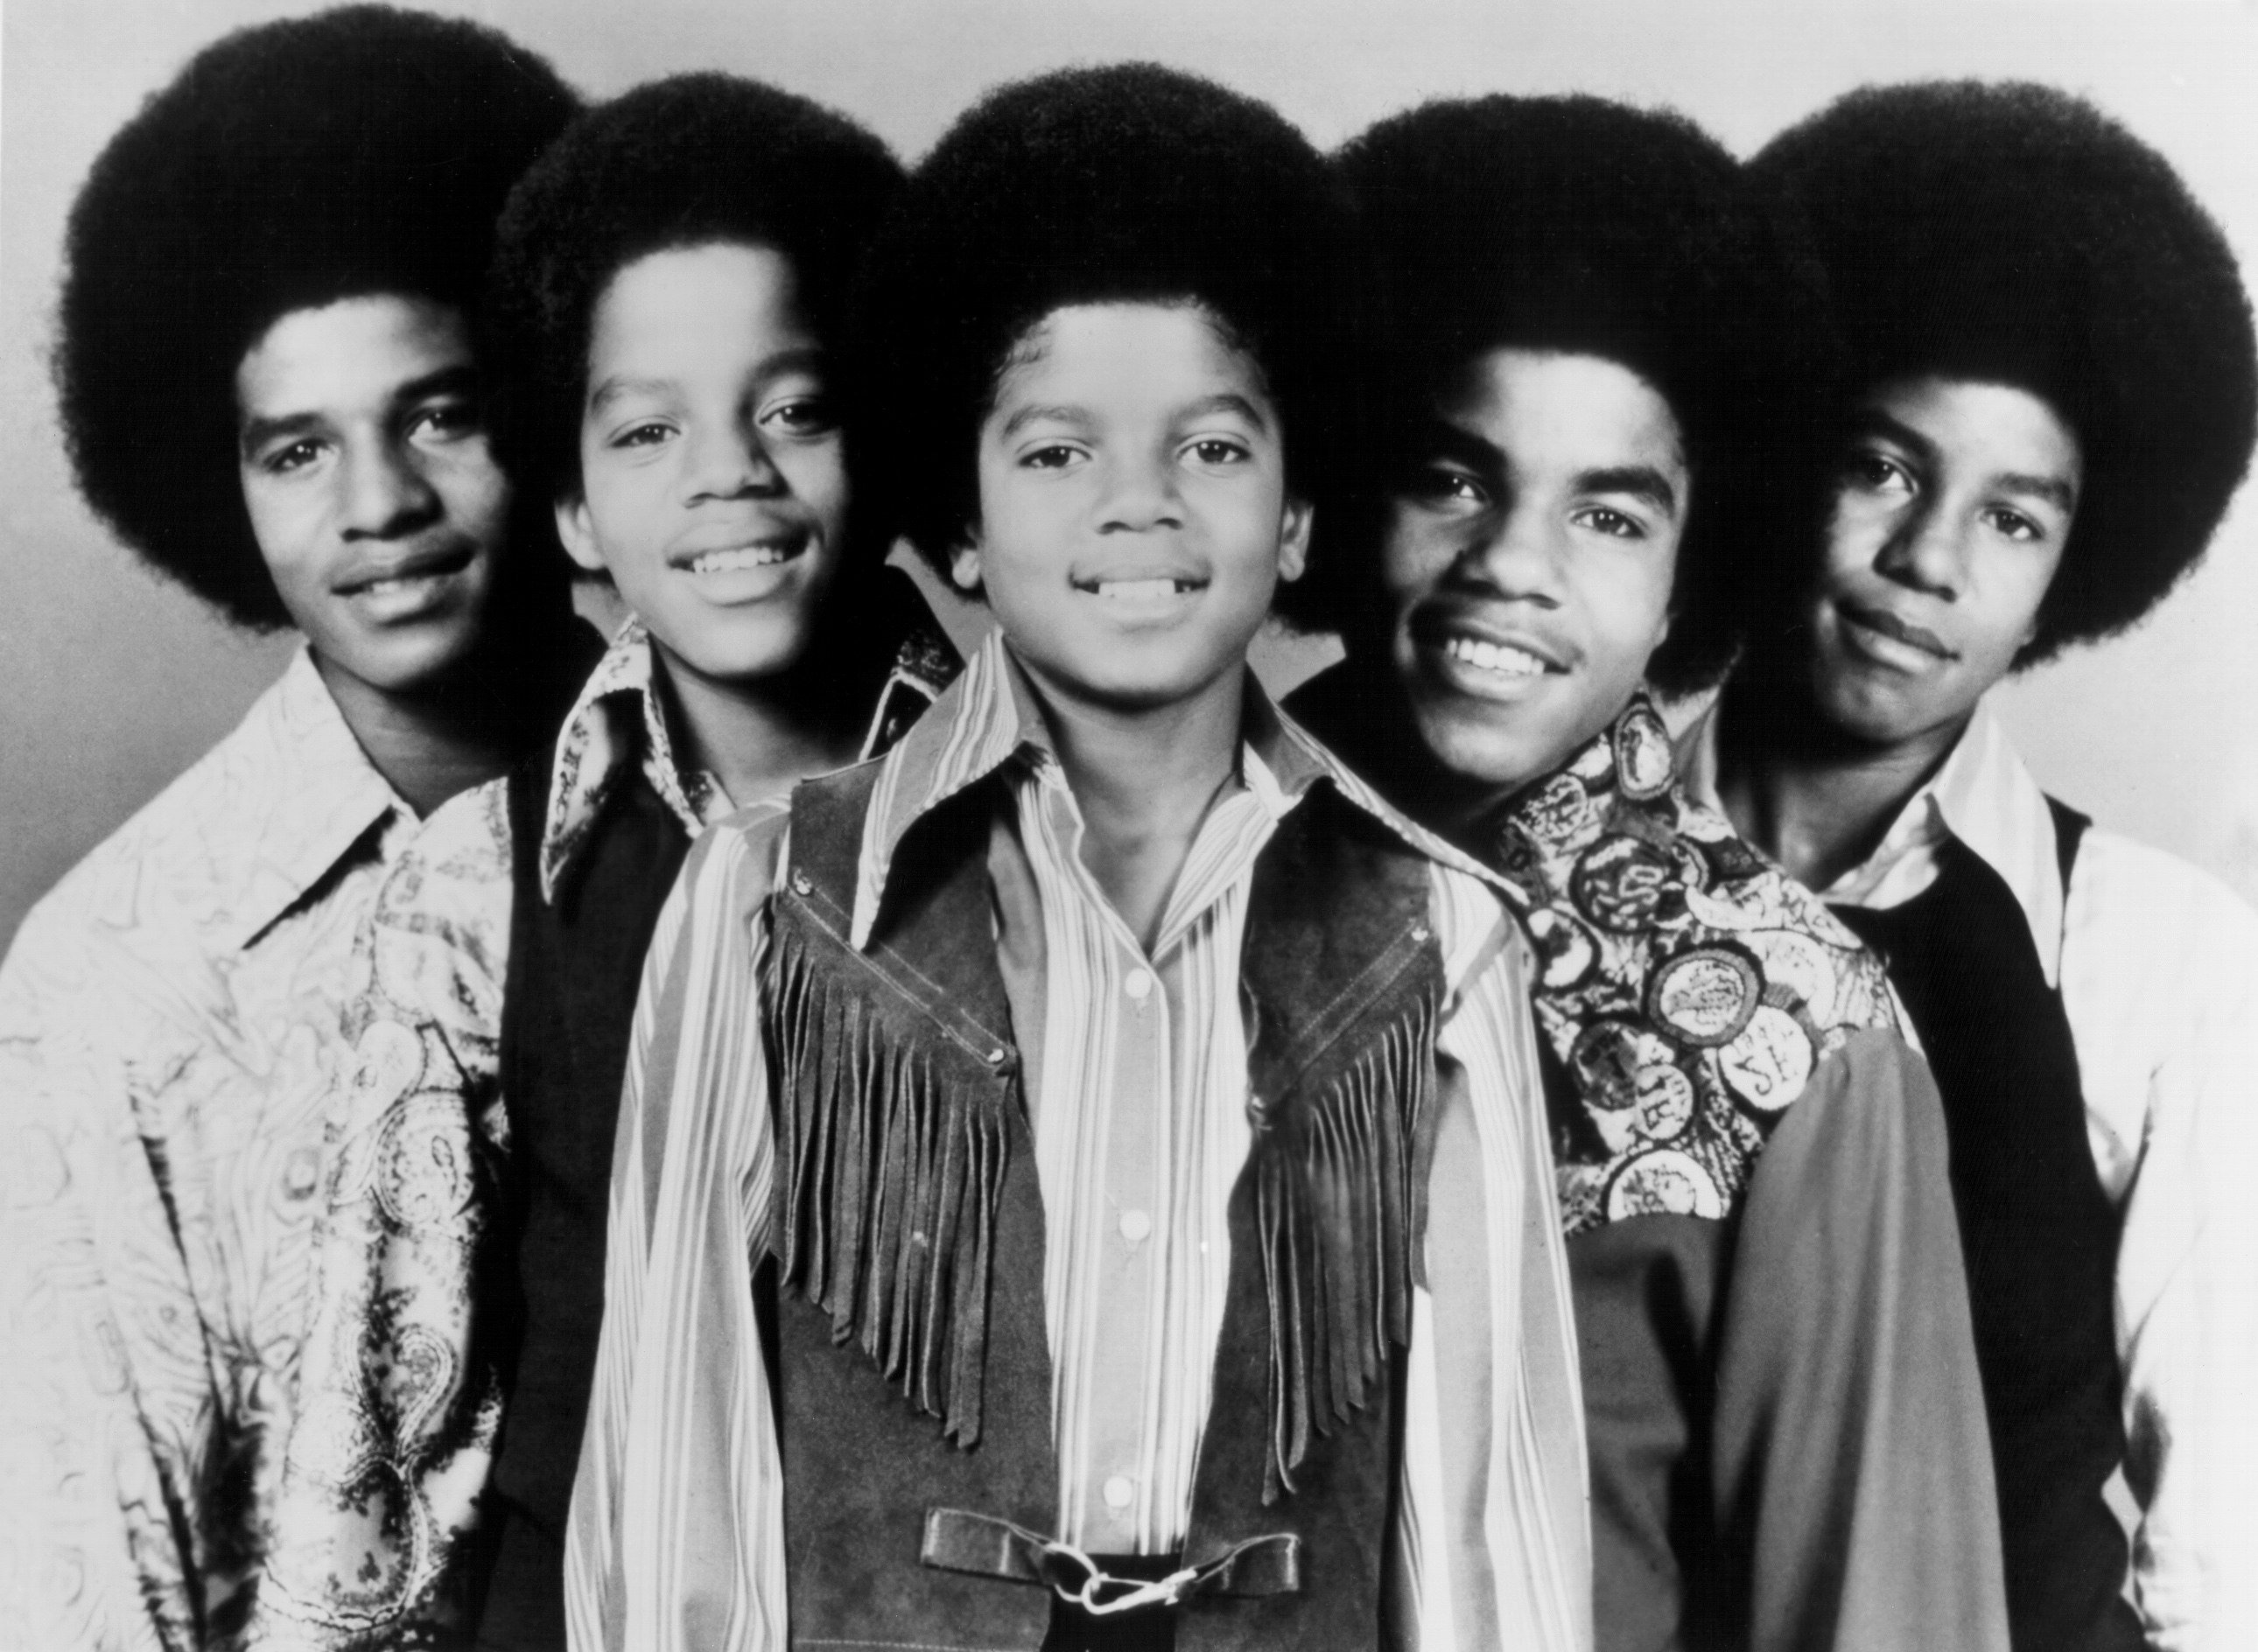 The Jackson 5's Tito Jackson, Marlon Jackson, Michael Jackson, Jackie Jackson, and Jermaine Jackson standing in a row